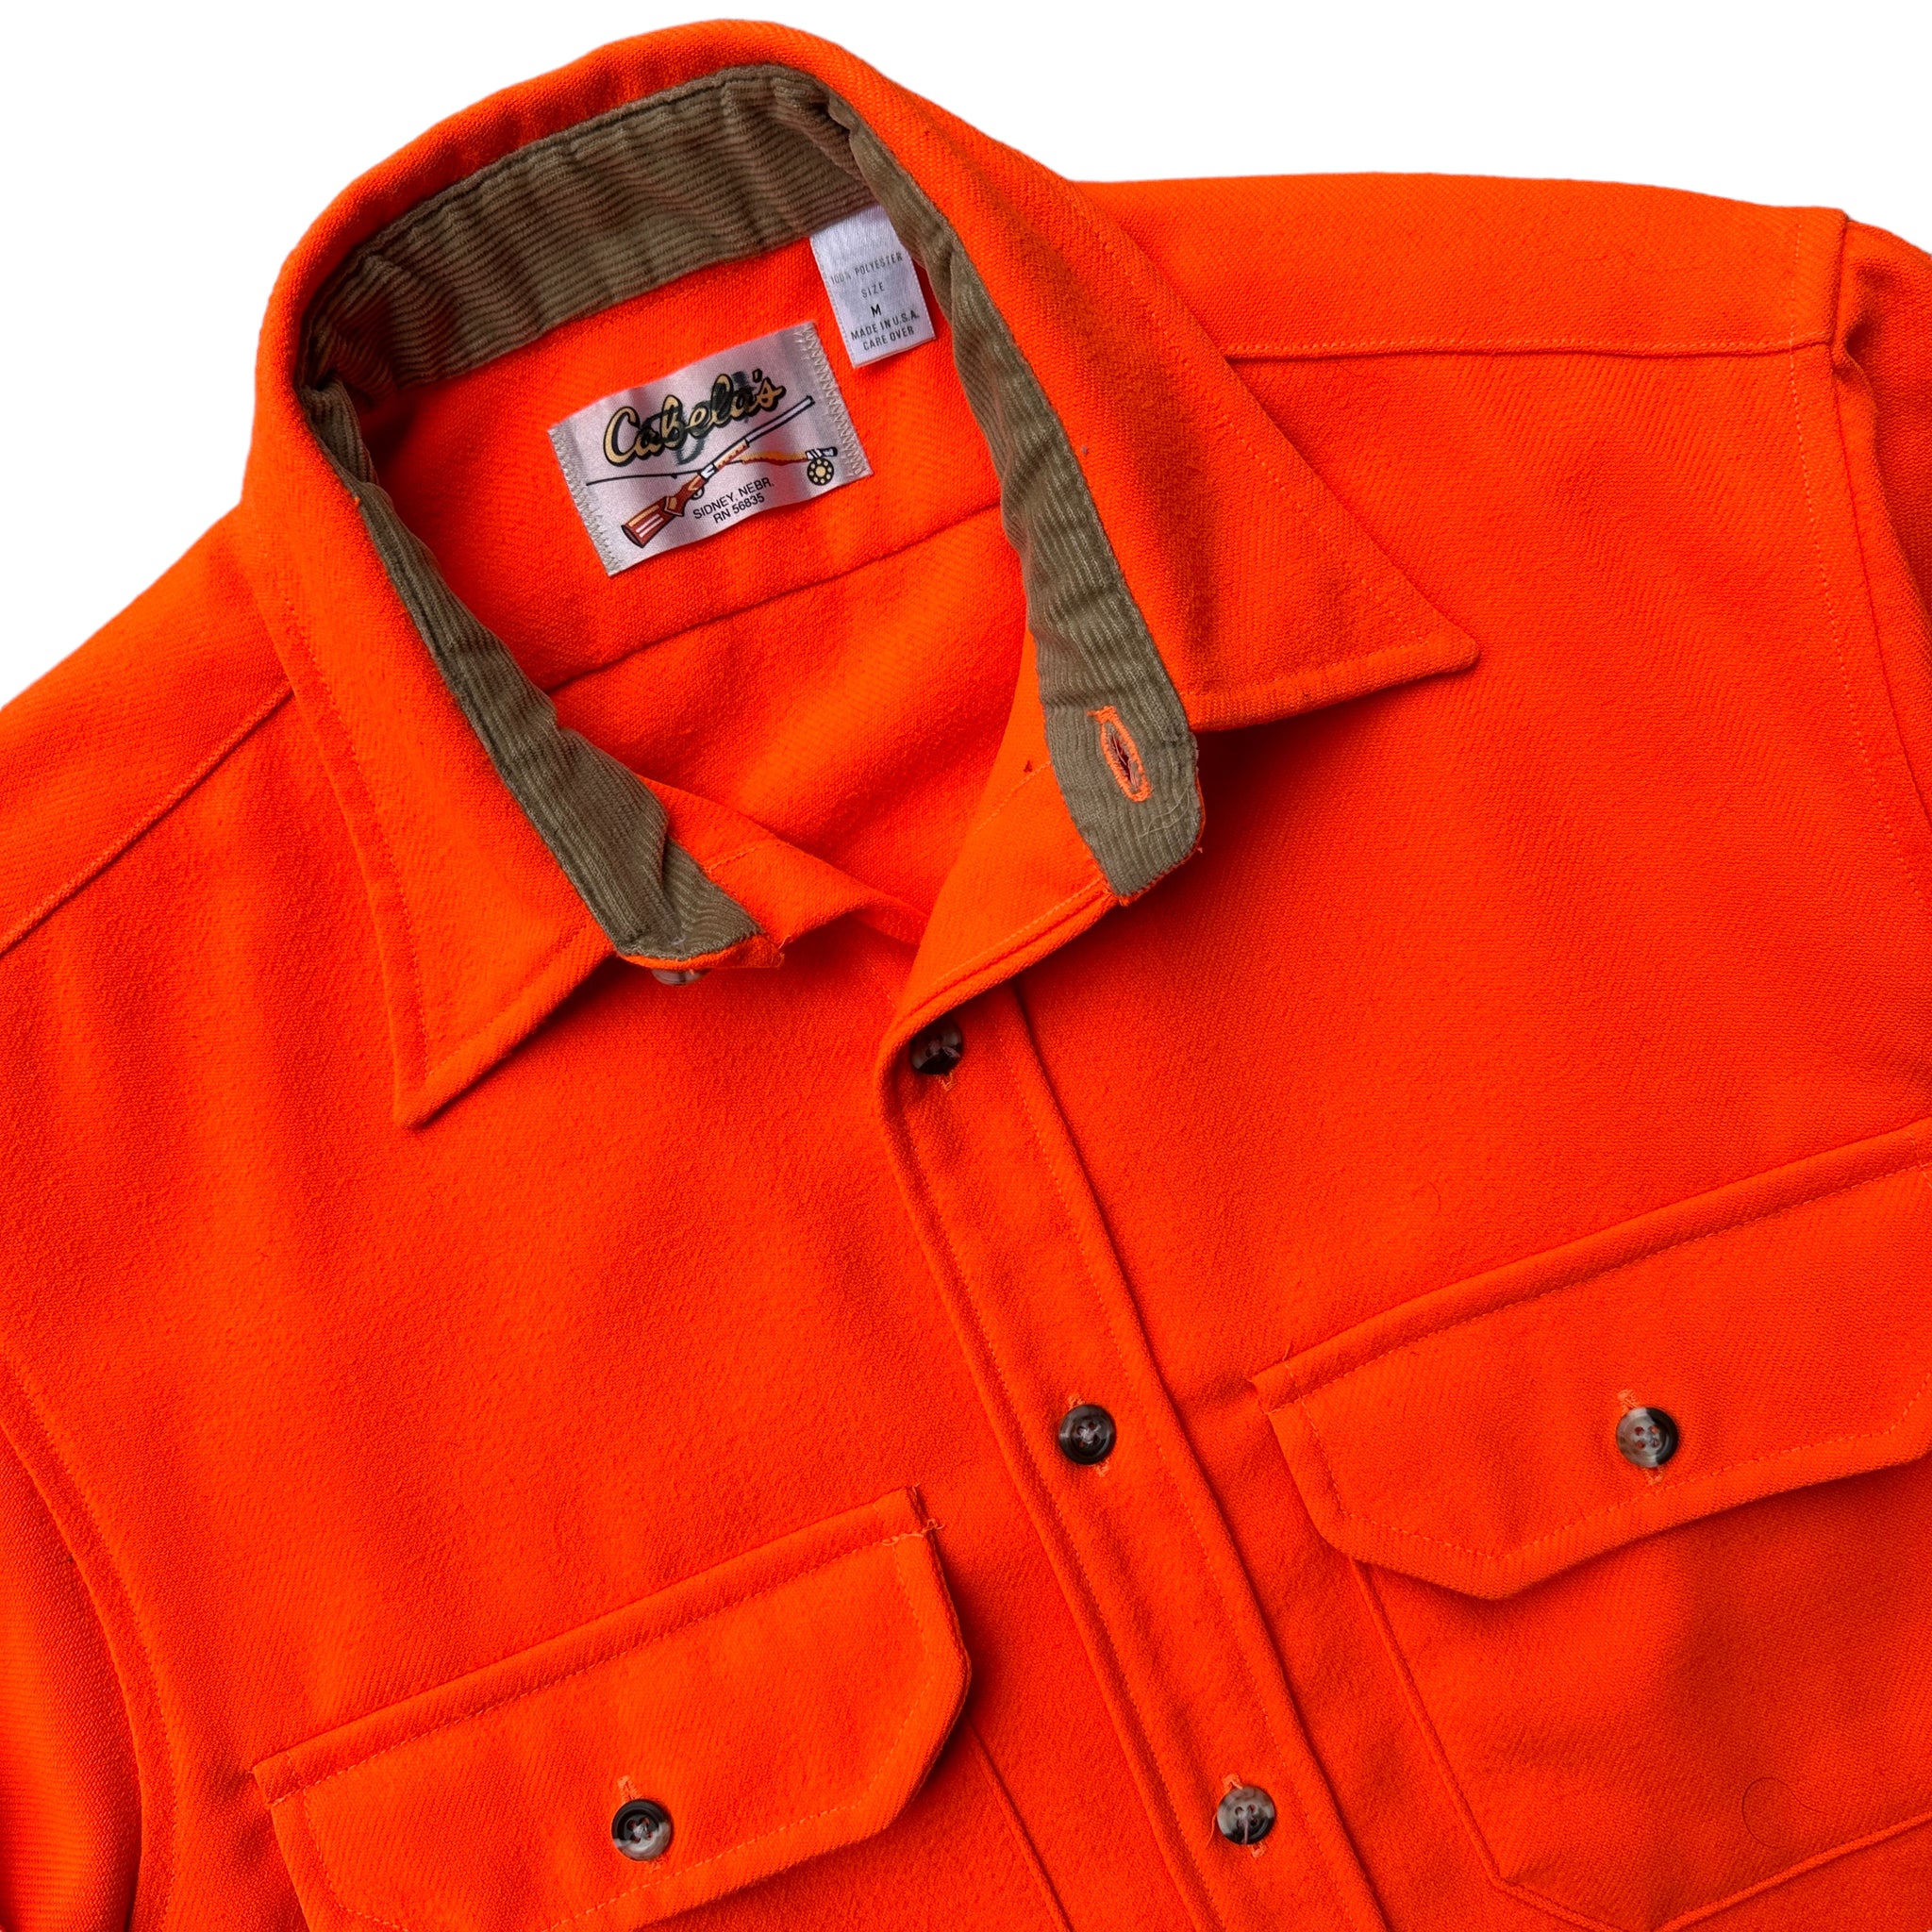 80s Cabelas blaze orange shirt medium